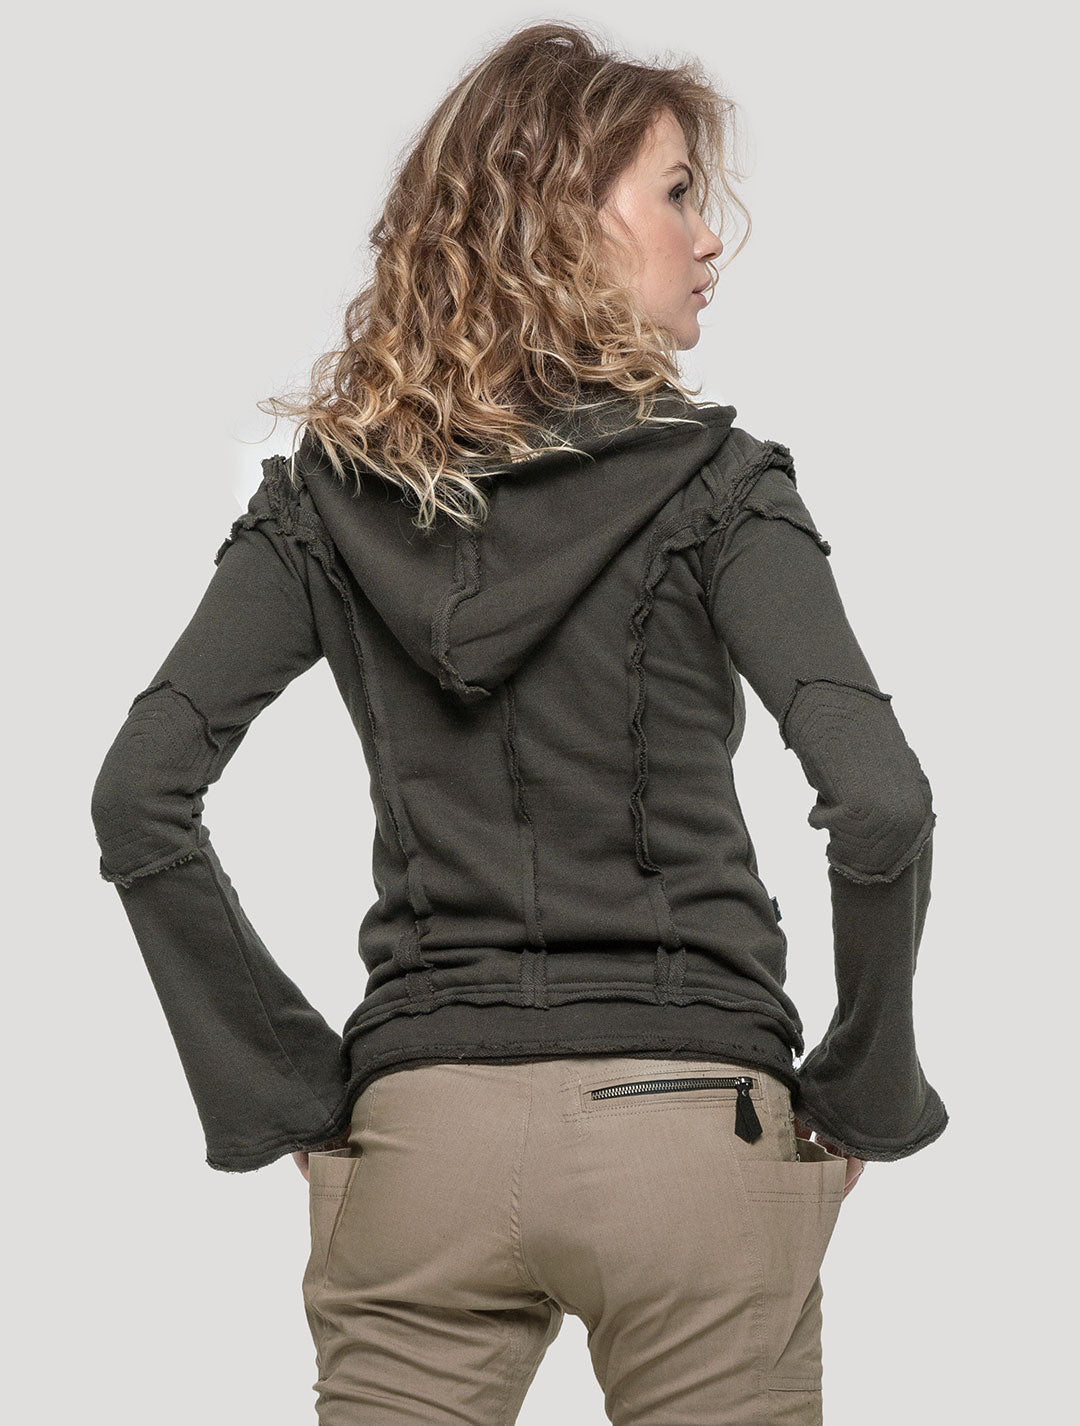 Olive green 'Armour' 100% Cotton Hoodie Jacket - Psylo Fashion